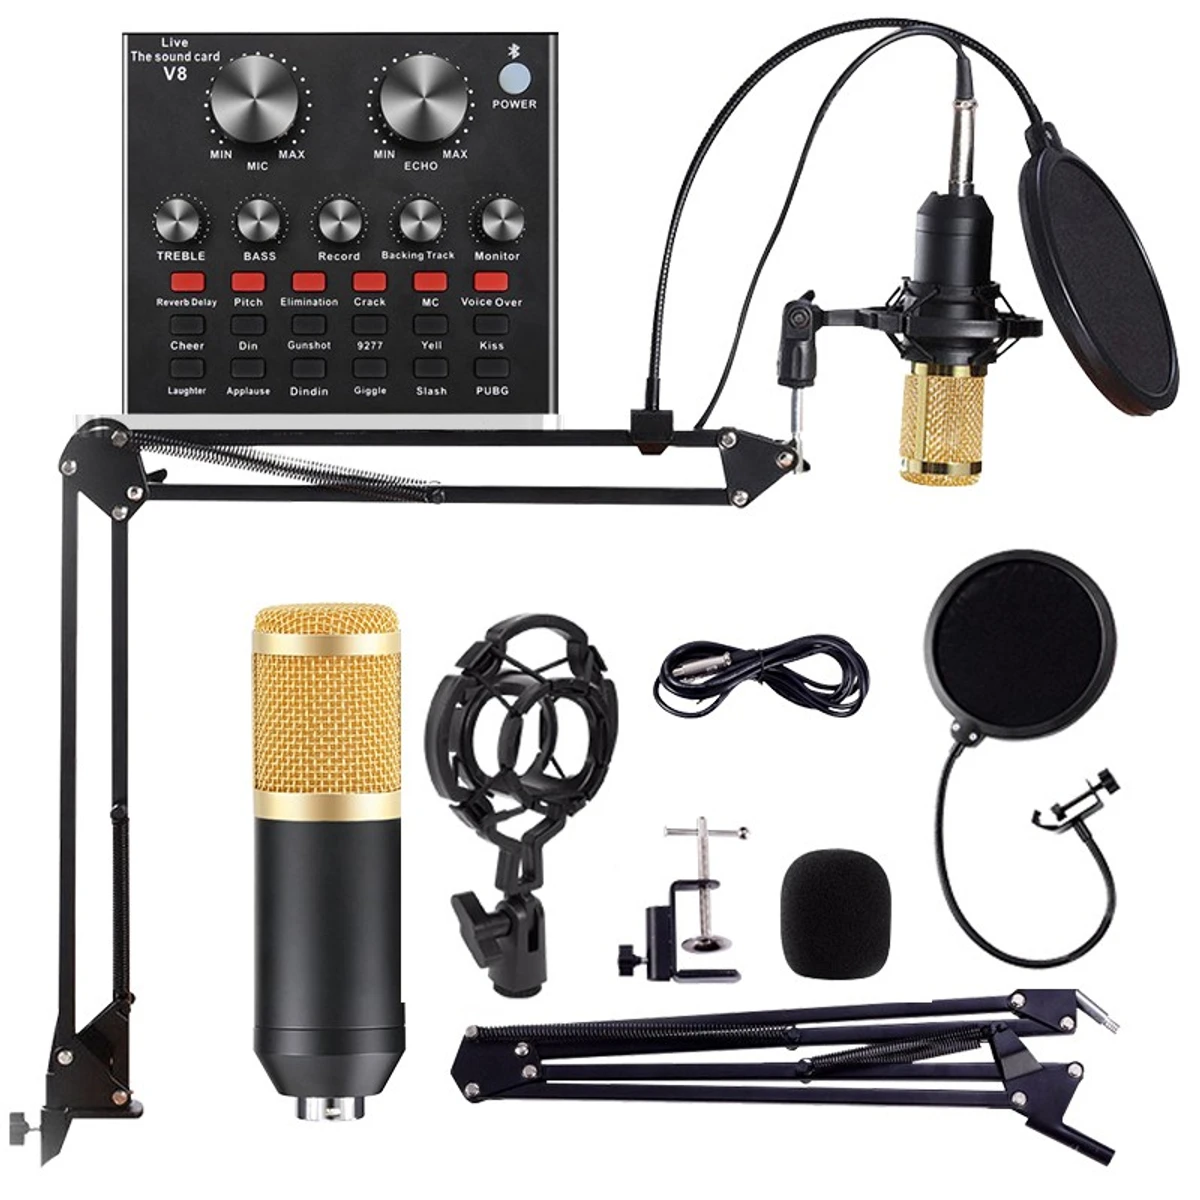 BM-800 and V8 Live Sound Card Condenser Microphone Full Studio Setup